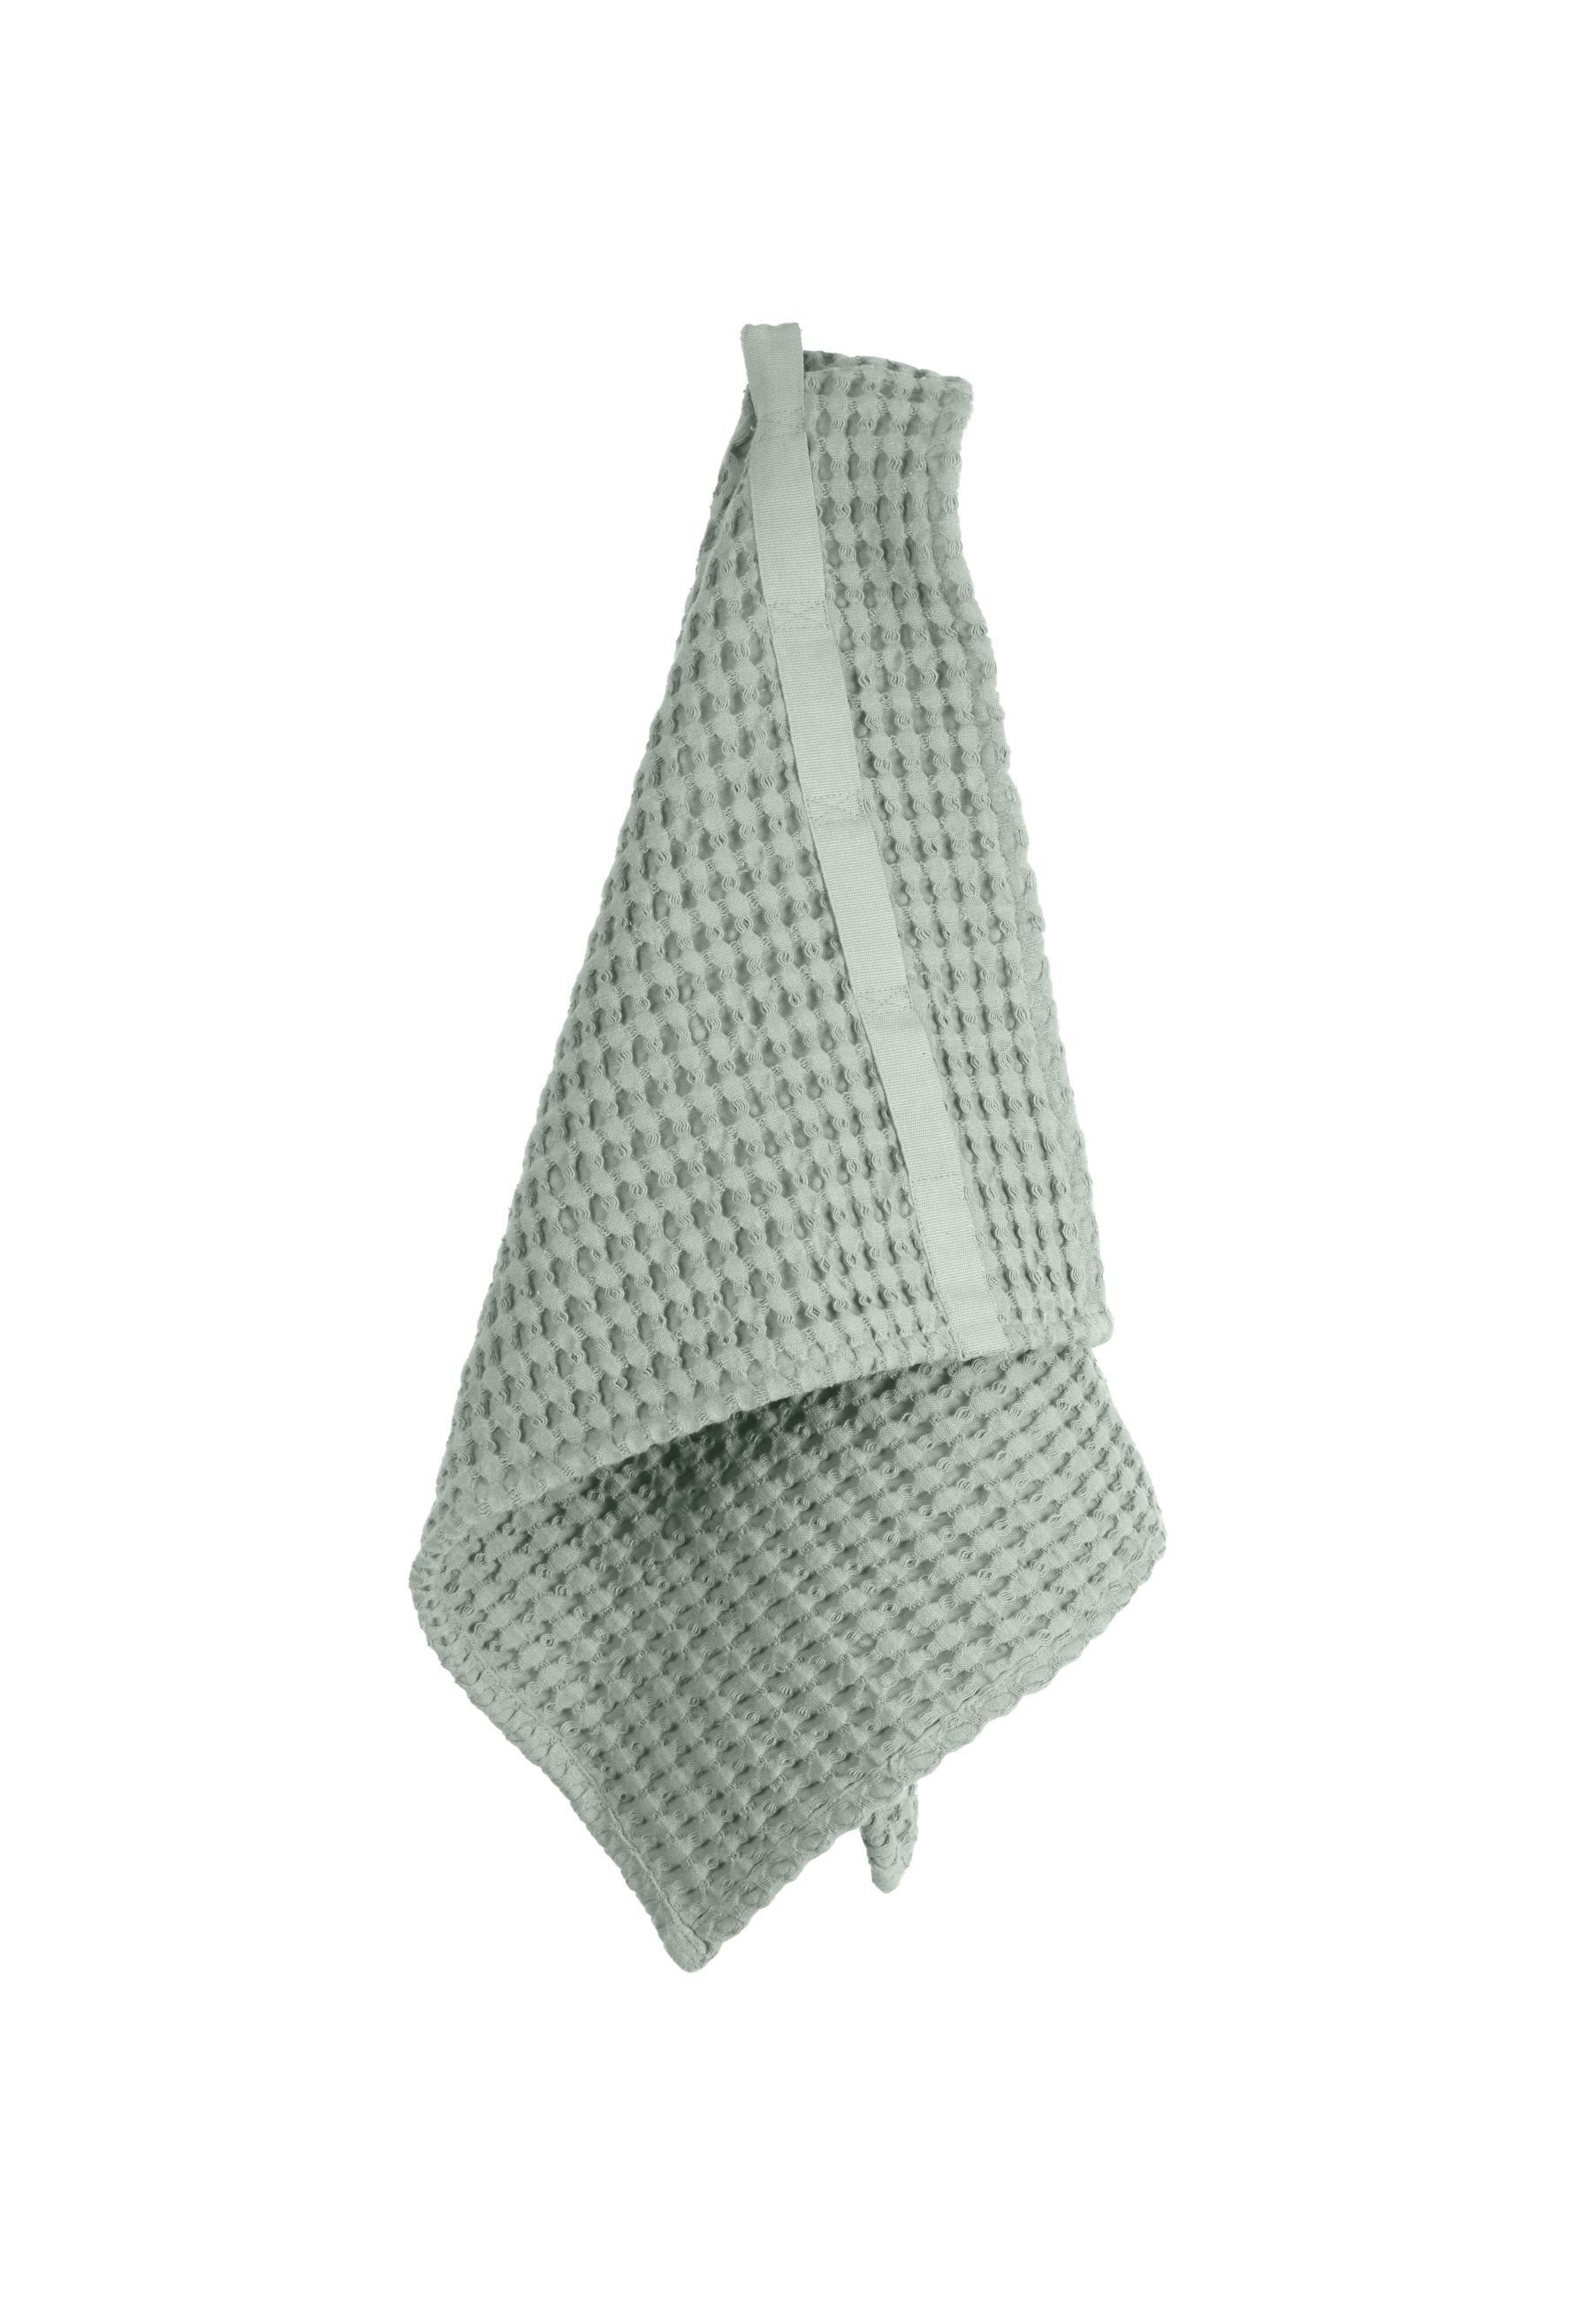 The Organic Company Handtuch Mint Hand Bio-Baumwolle Towel, - Waffle Dusty Waffelpique, Big pastellgrün zertifizierte GOTS